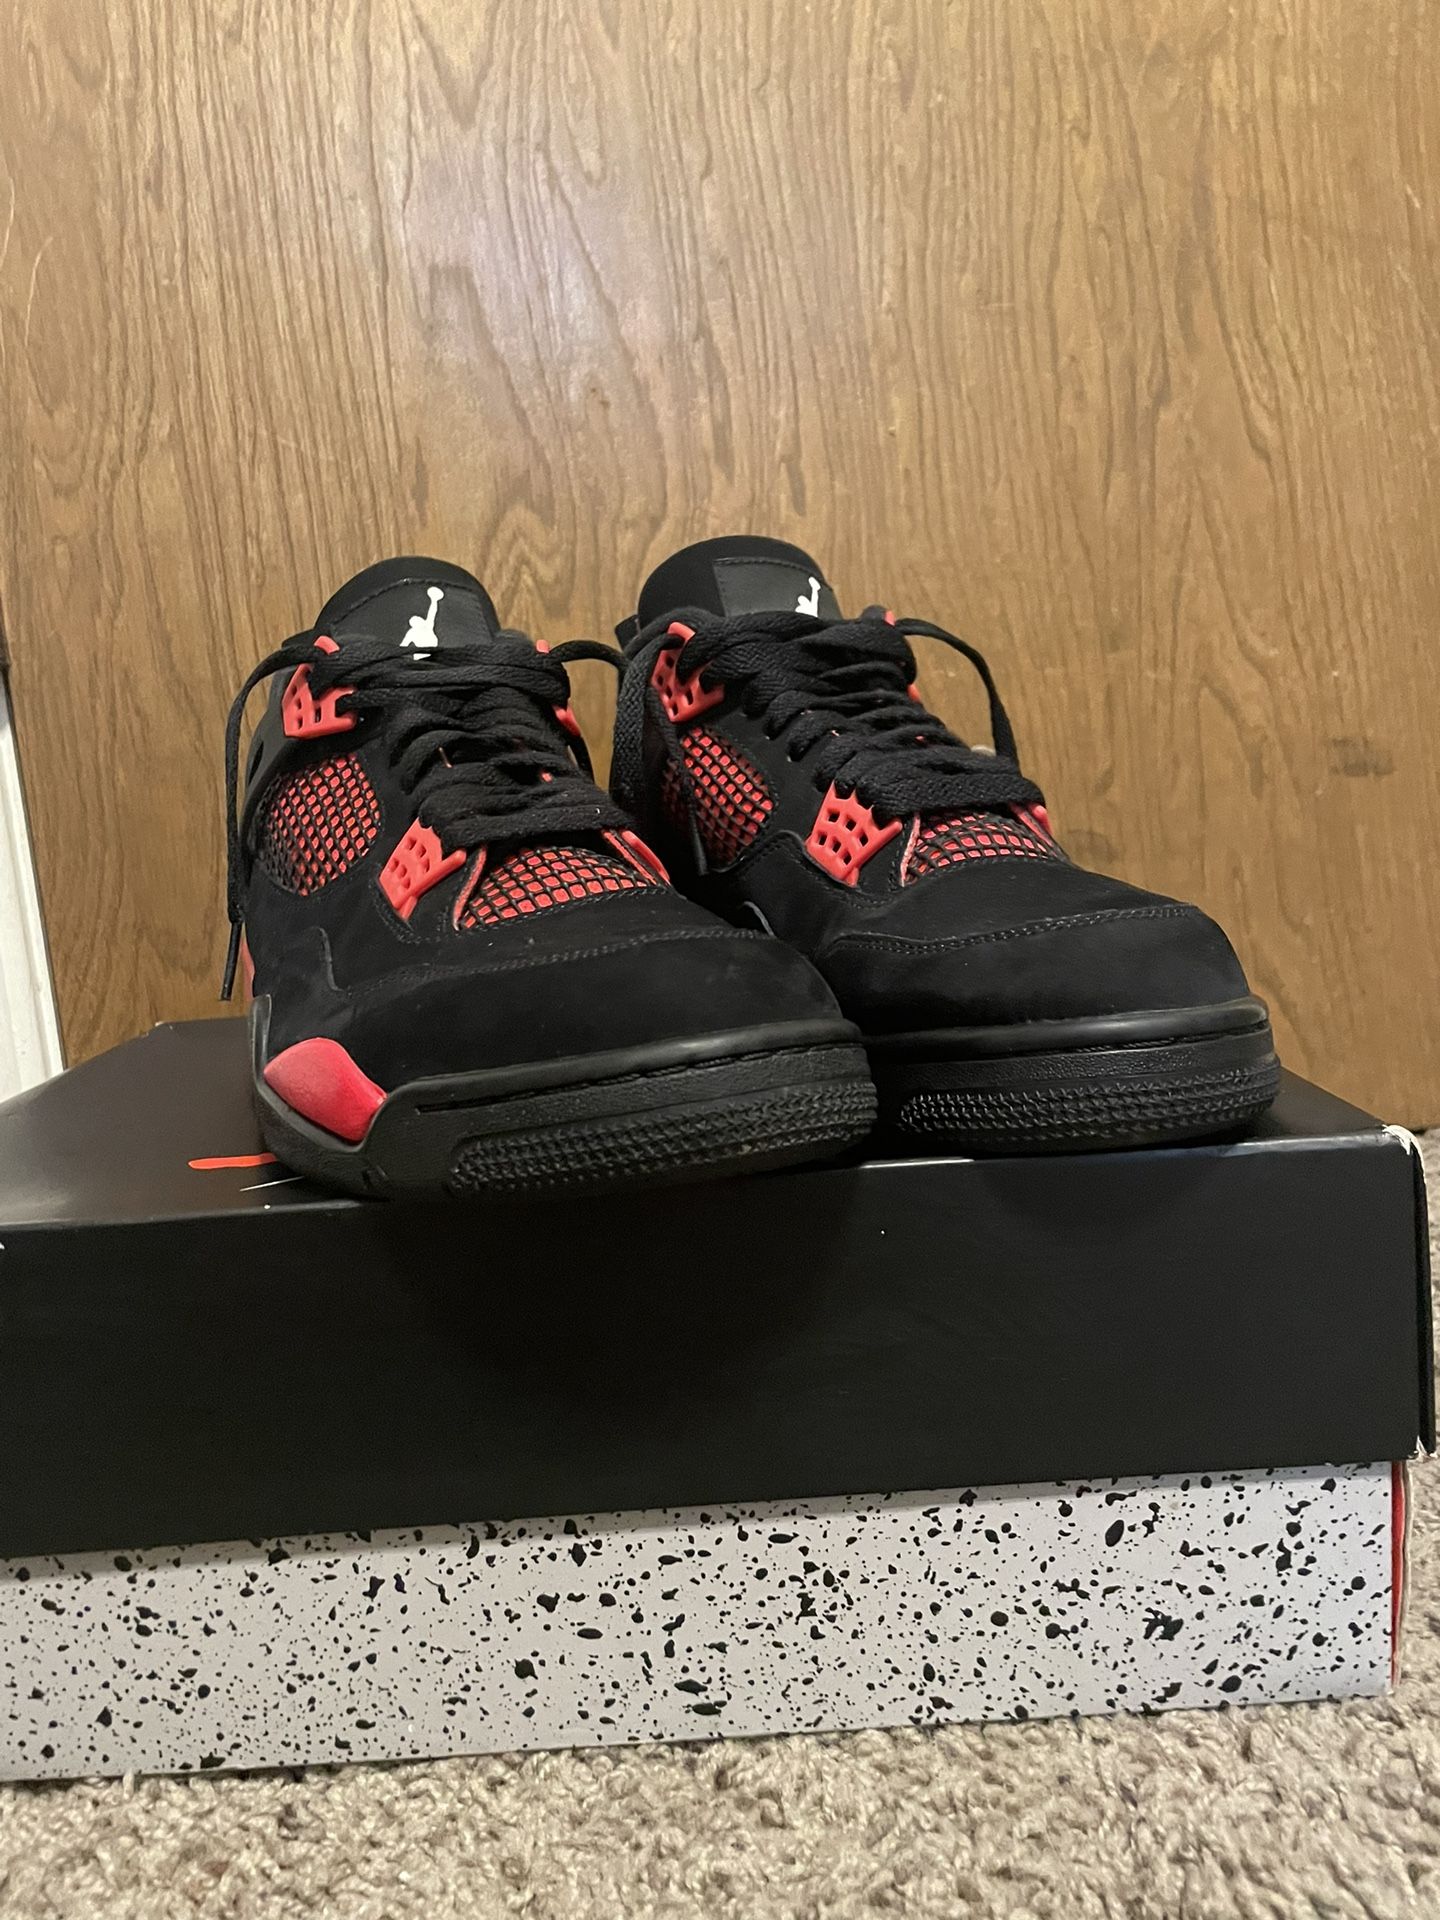 Jordan 4 ‘Red Thunder’ Size 11 Used Price:$340